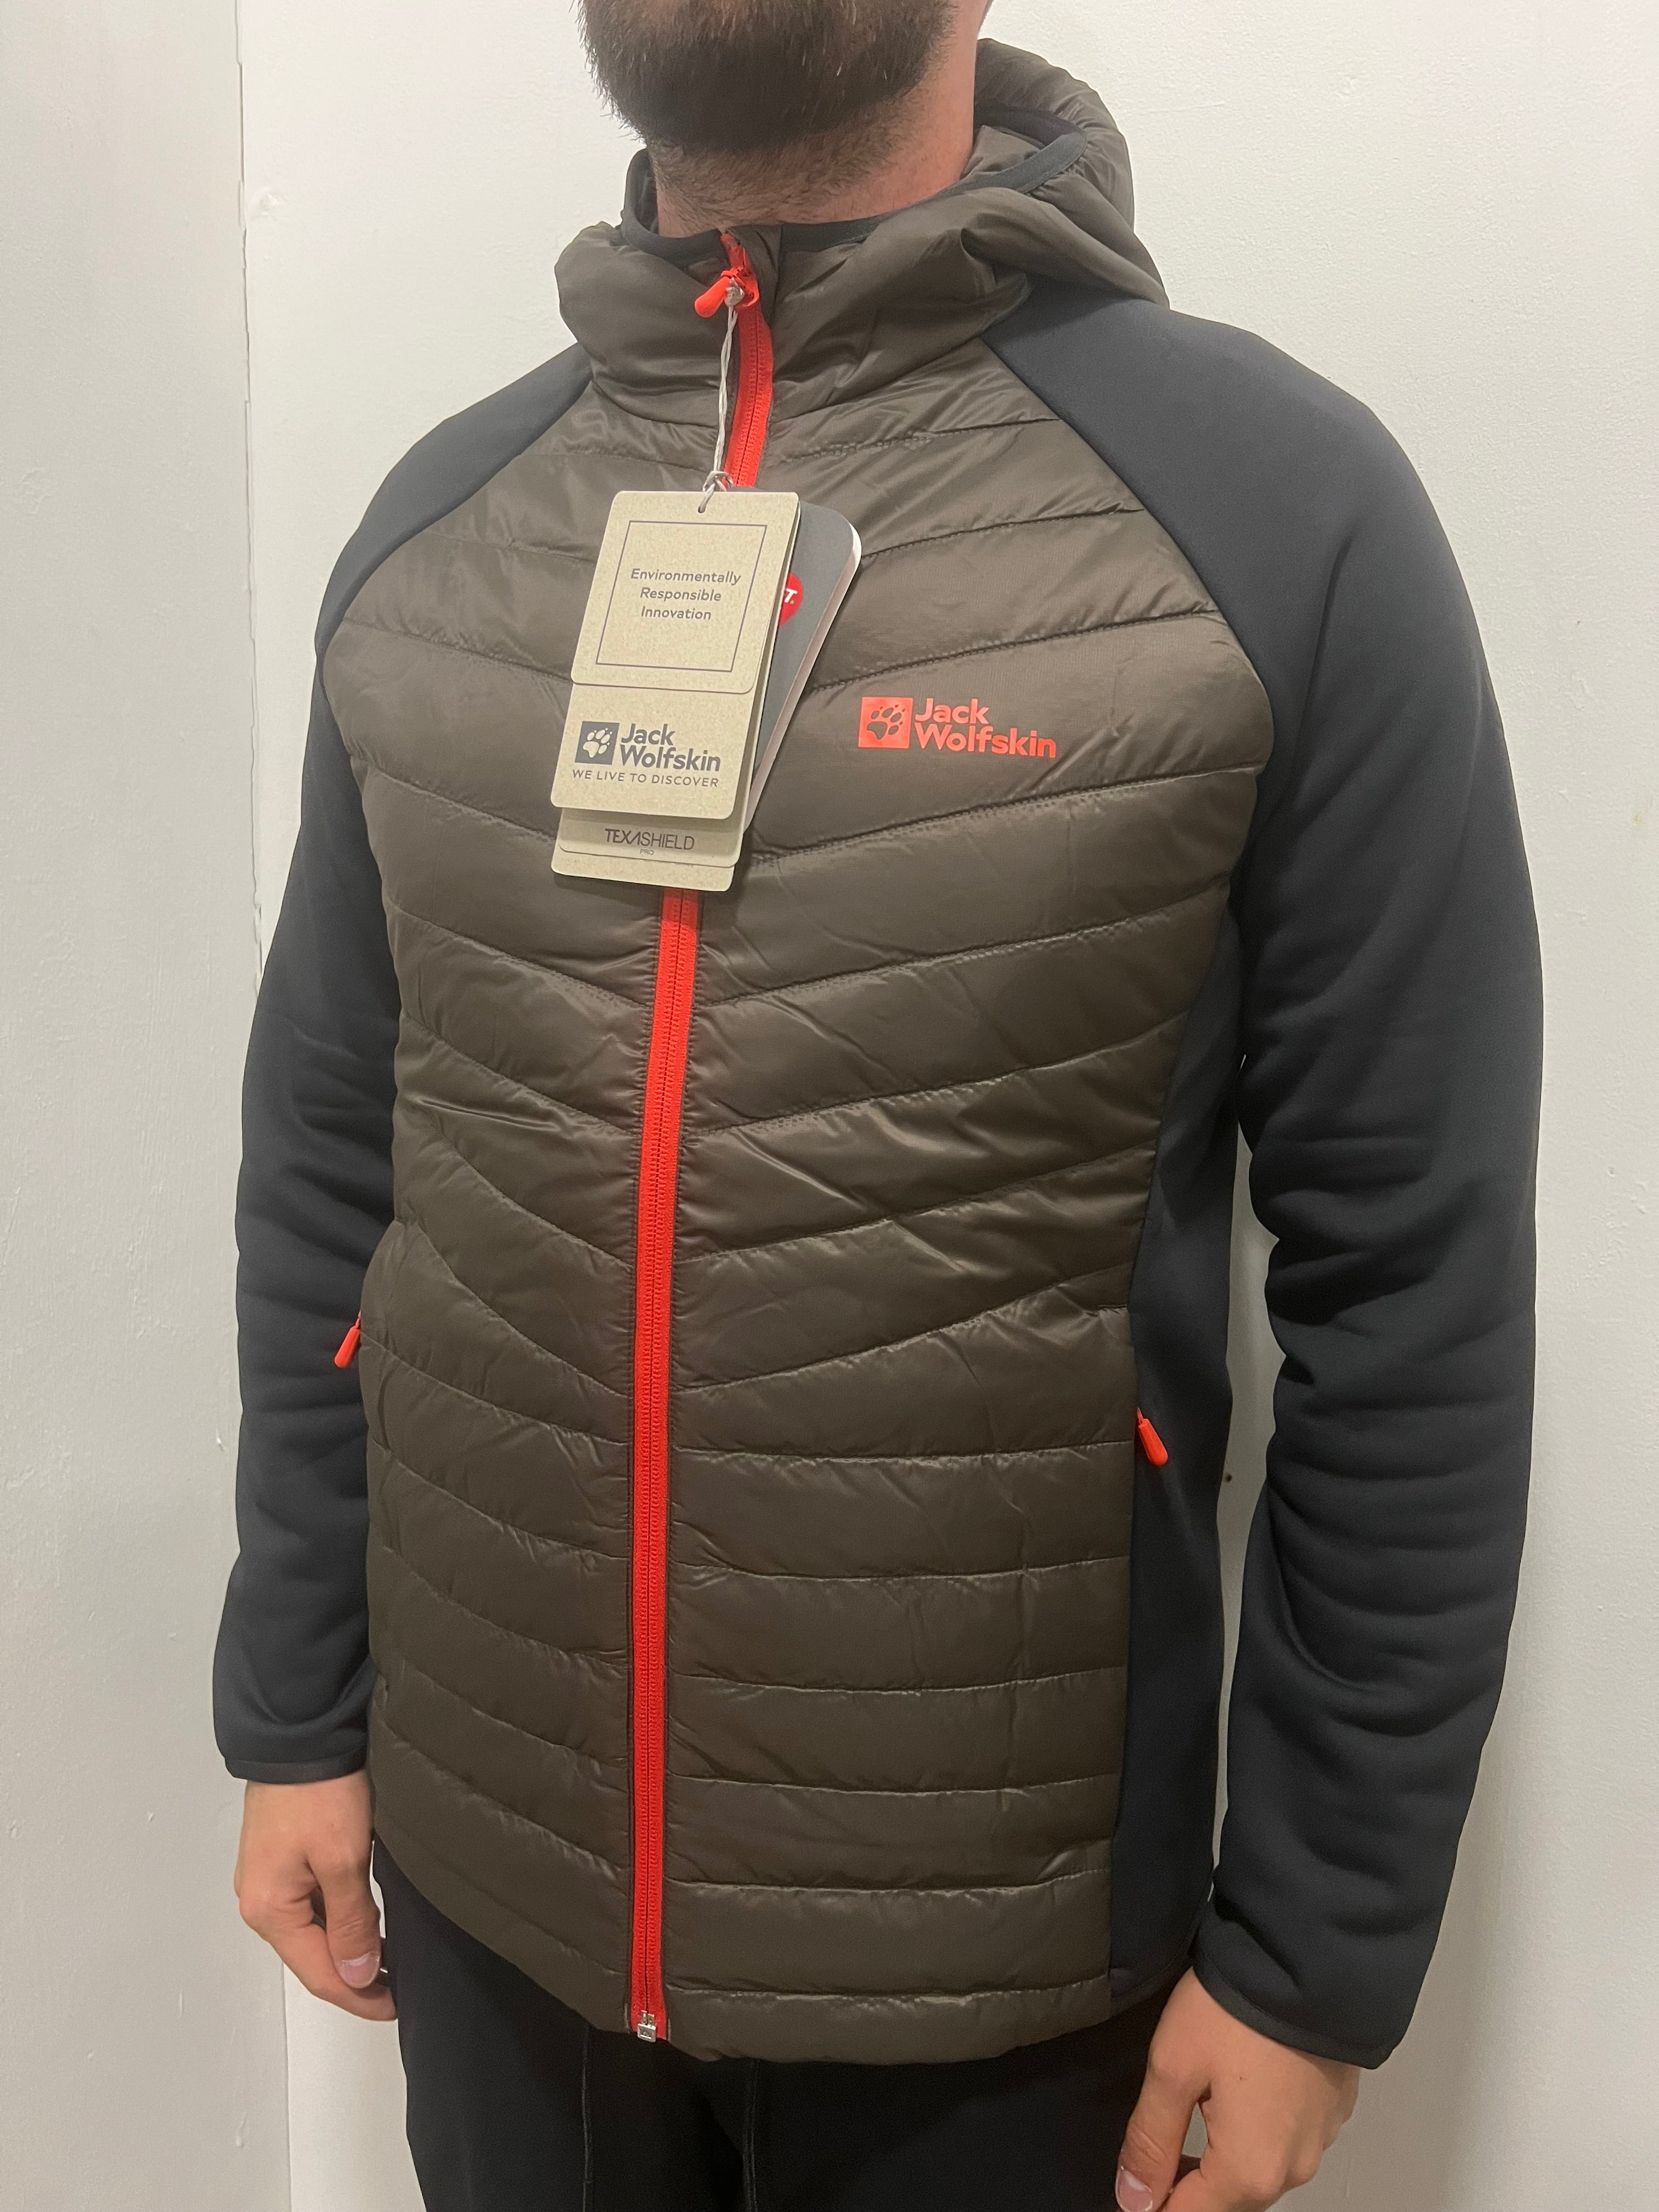 Jack Wolfskin Routeburn Pro – Cold Hybrid Jacket Coffe Clothing - Chevron